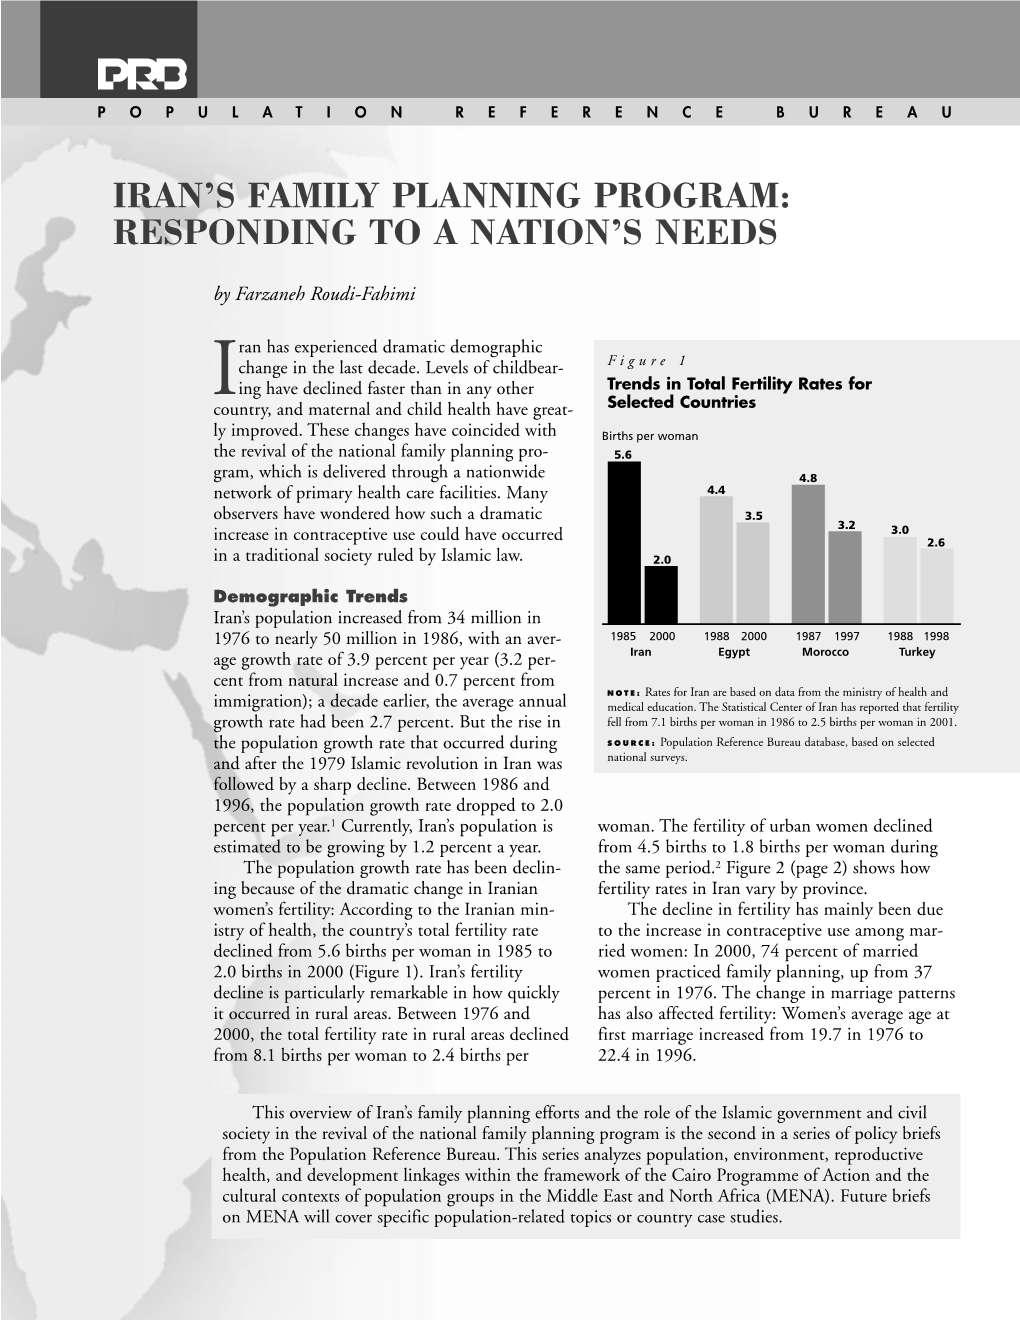 Iran's Successful Family Planning Program